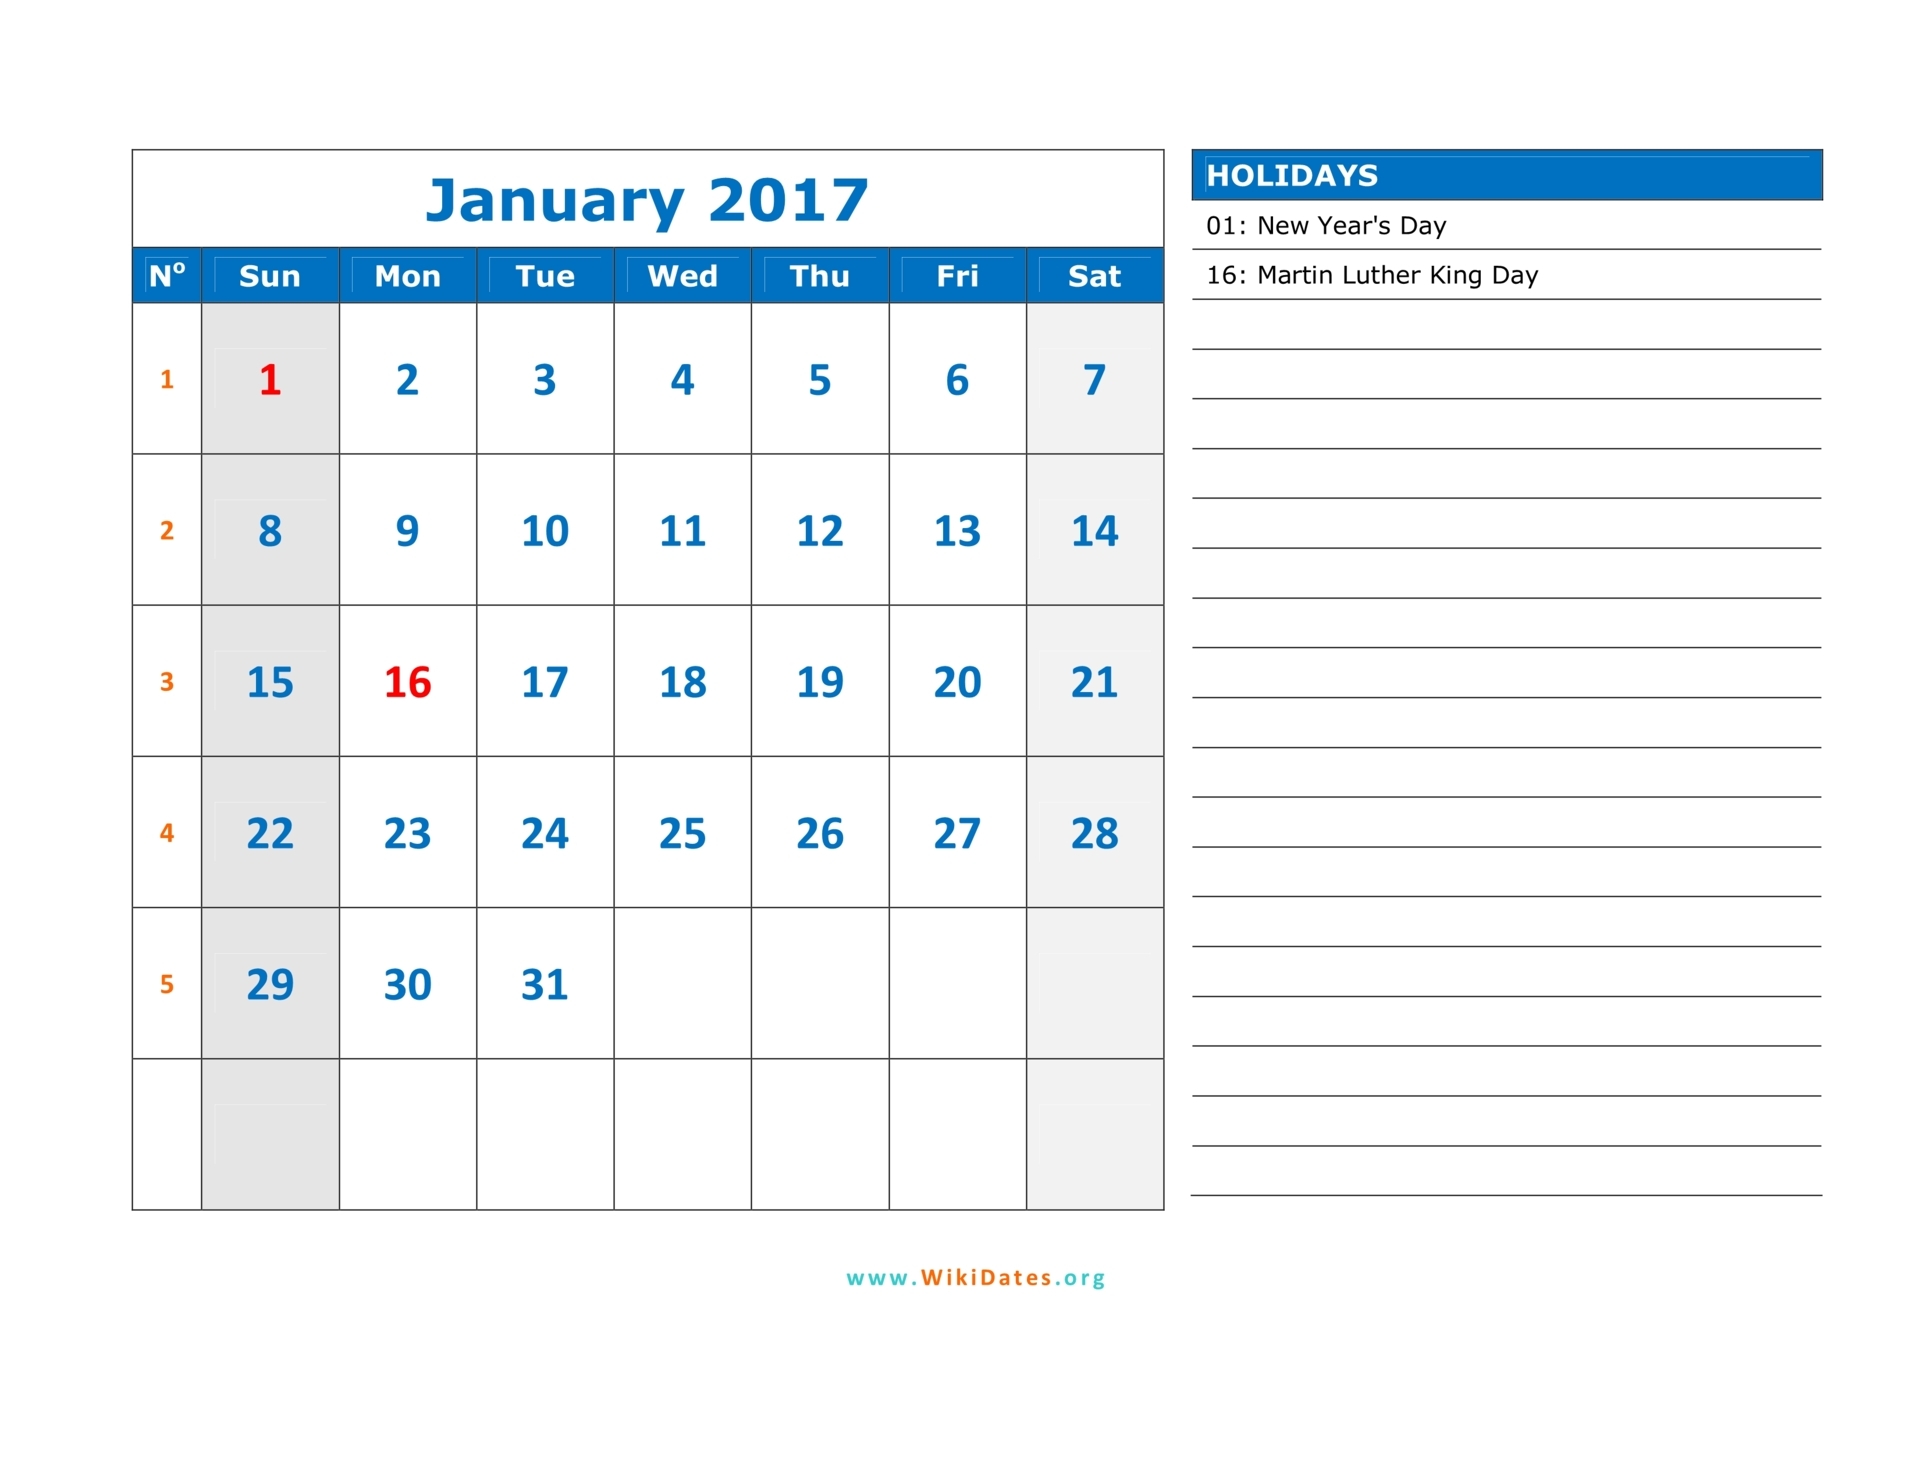 january-2017-calendar-wikidates